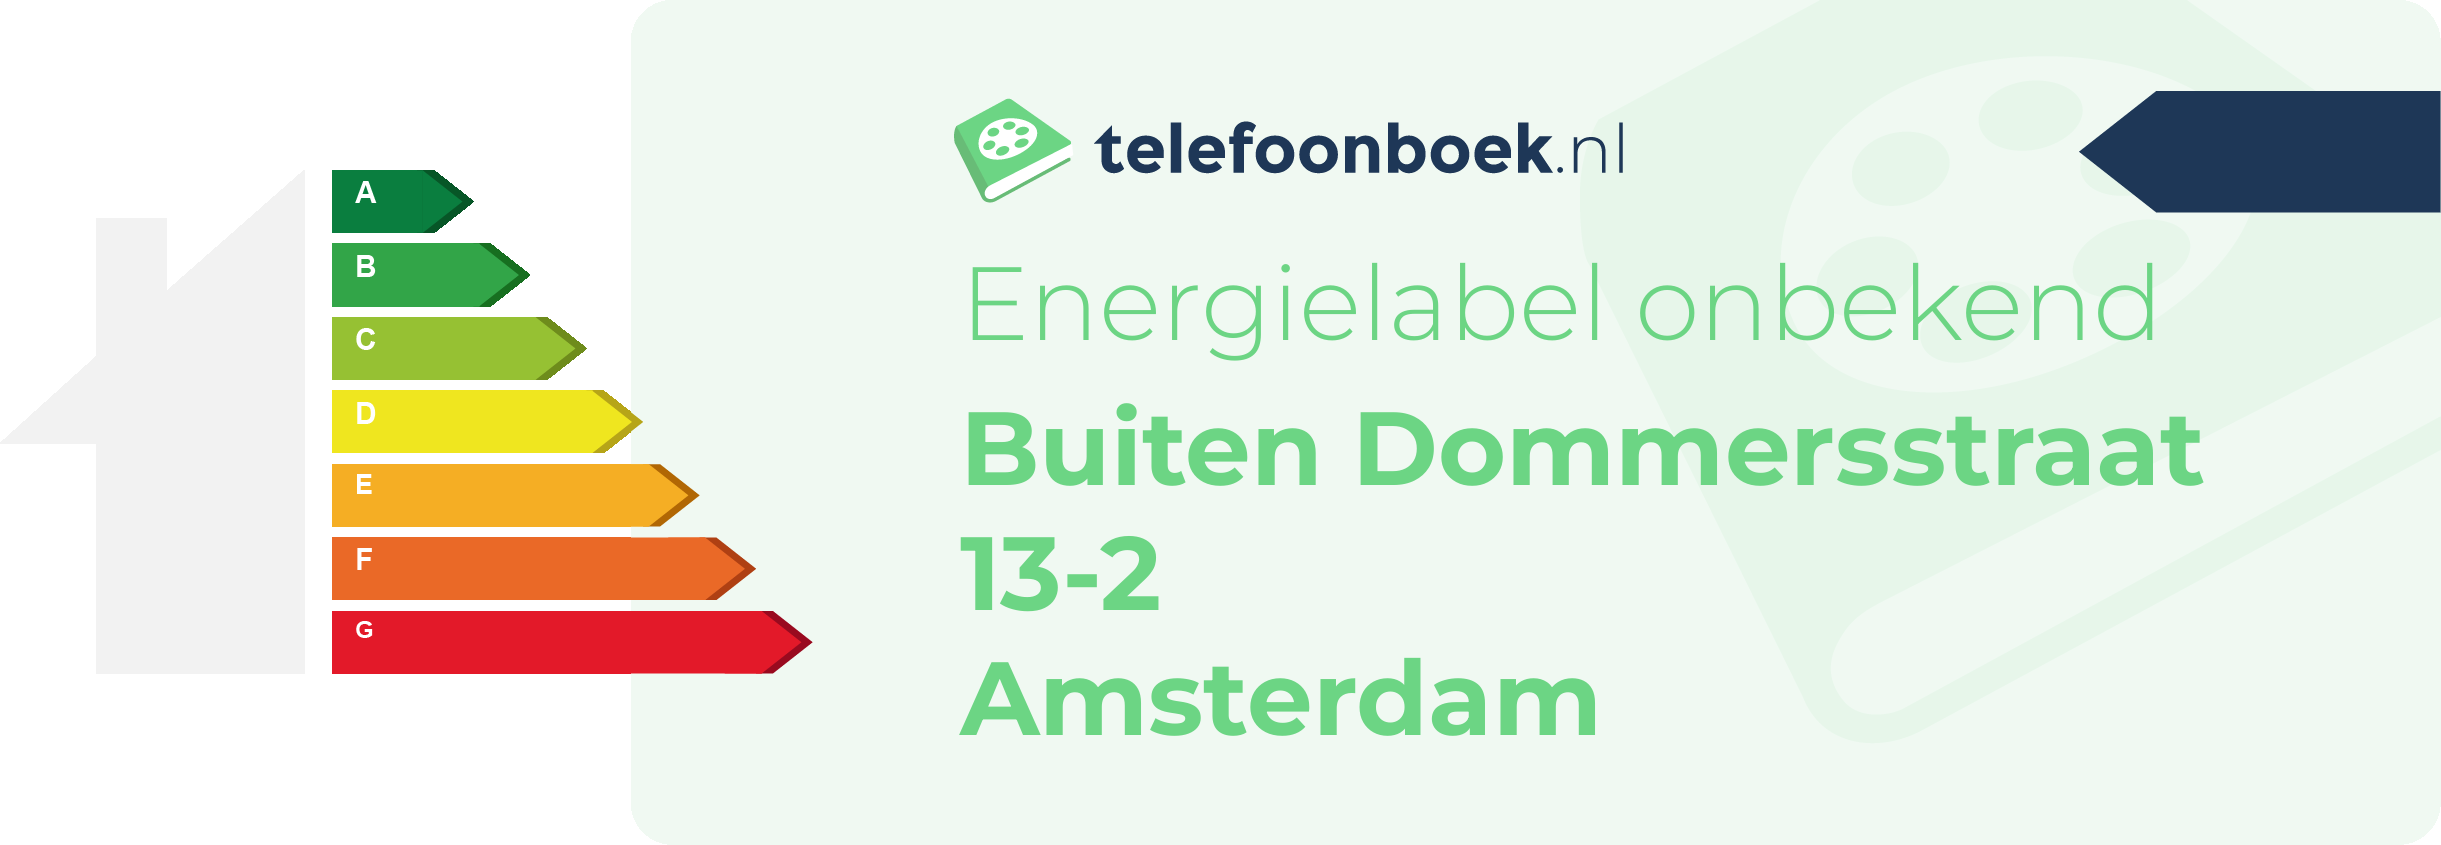 Energielabel Buiten Dommersstraat 13-2 Amsterdam